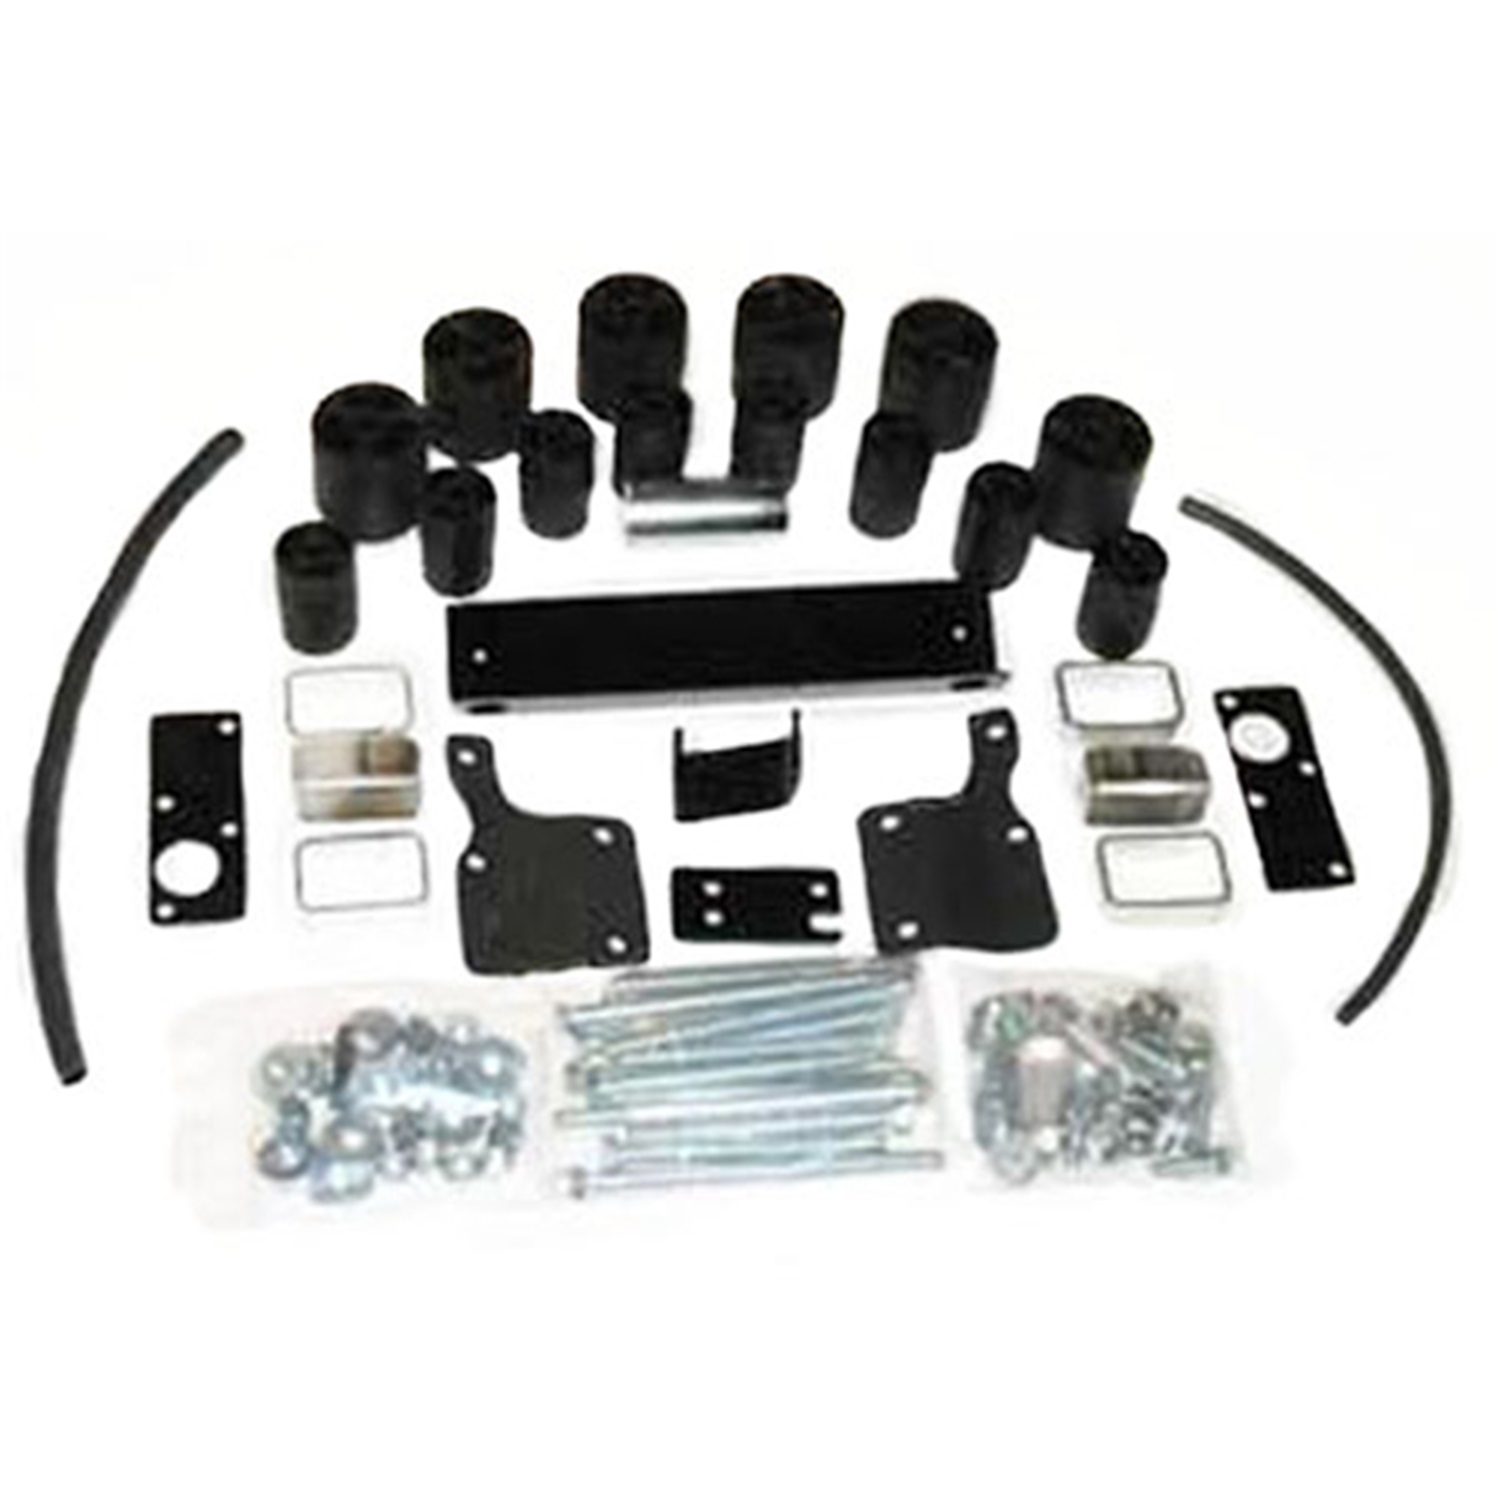 Performance Accessories Performance Accessories 4063 Body Lift Kit Fits 86-97 D21 Pickup (Hard Body)